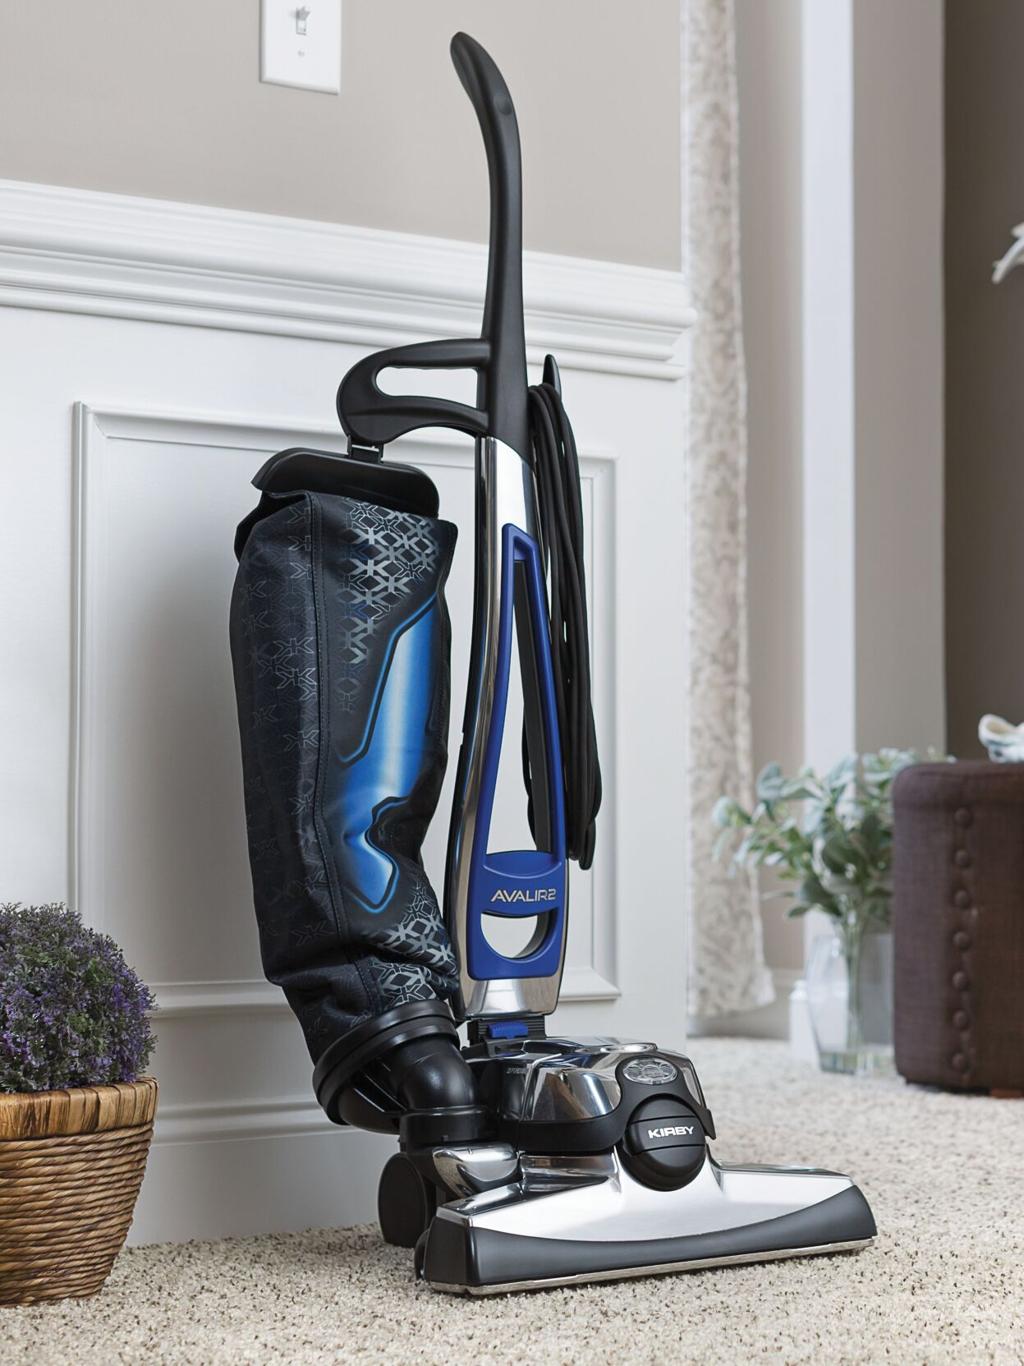 Brand NEW KIRBY vacuum!!!! LATEST MODEL!!! $1400 - Upright Vacuum Cleaners  - Lupus, Missouri, Facebook Marketplace